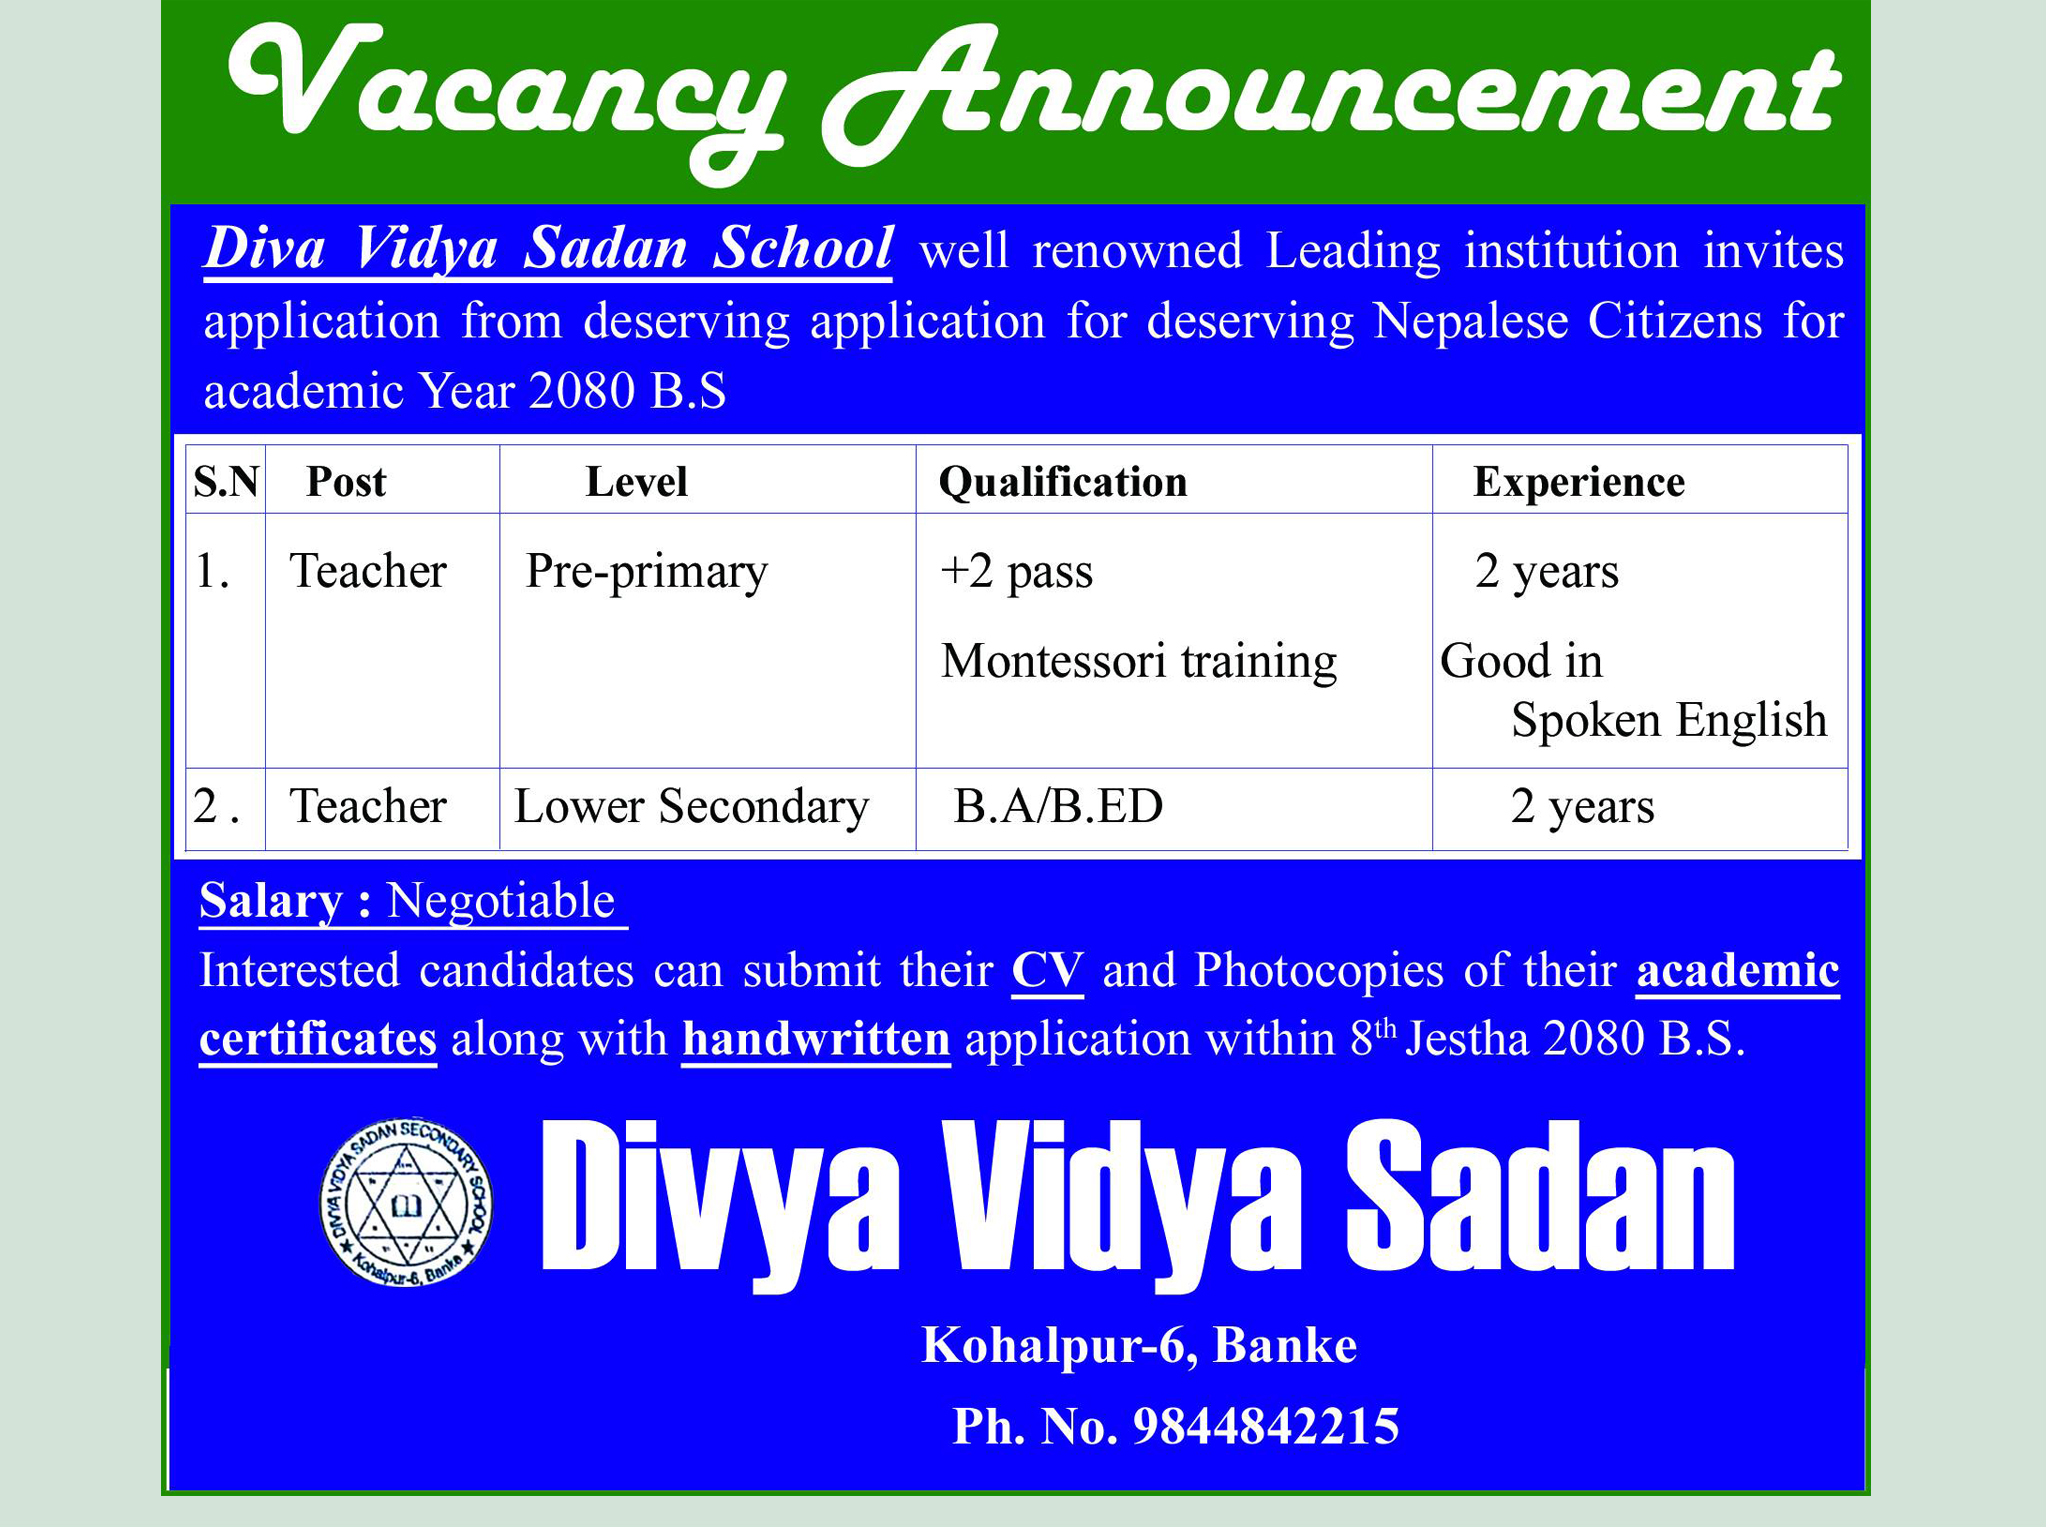 Vacancy Announcement of Divya Vidya Sadan School